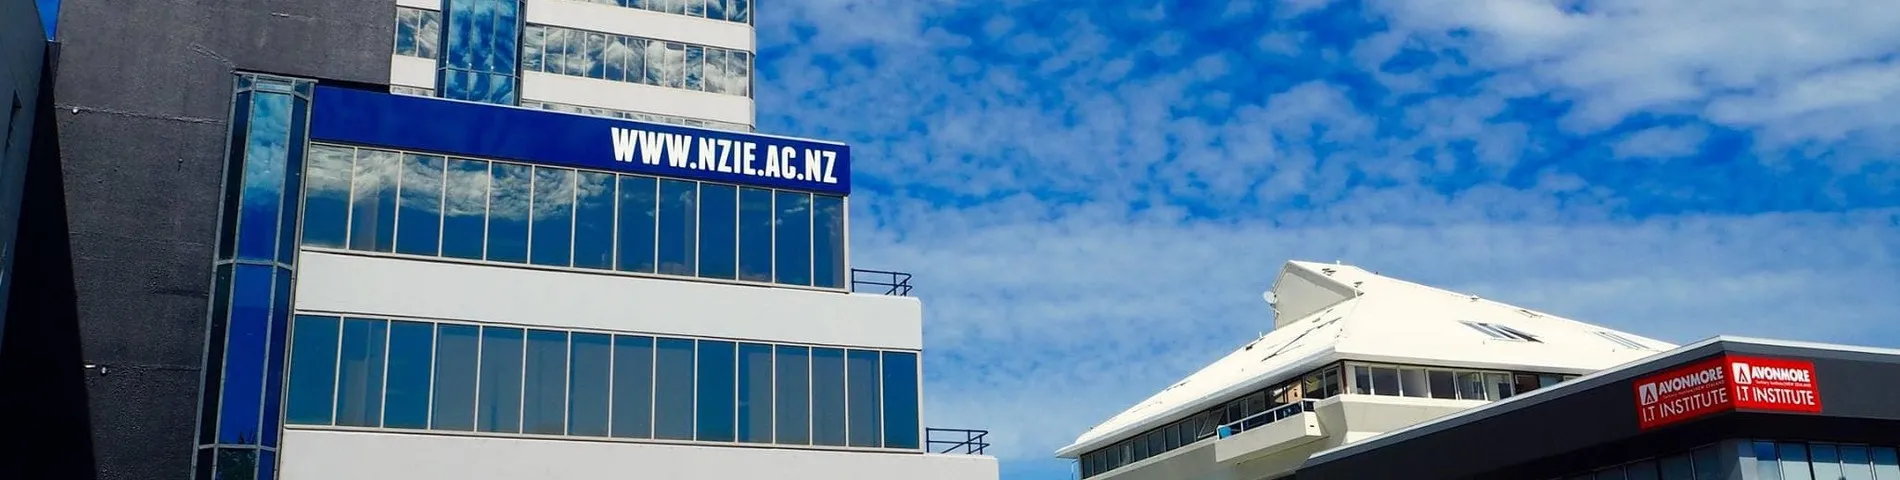 NZIE - New Zealand Institute of Education immagine 1